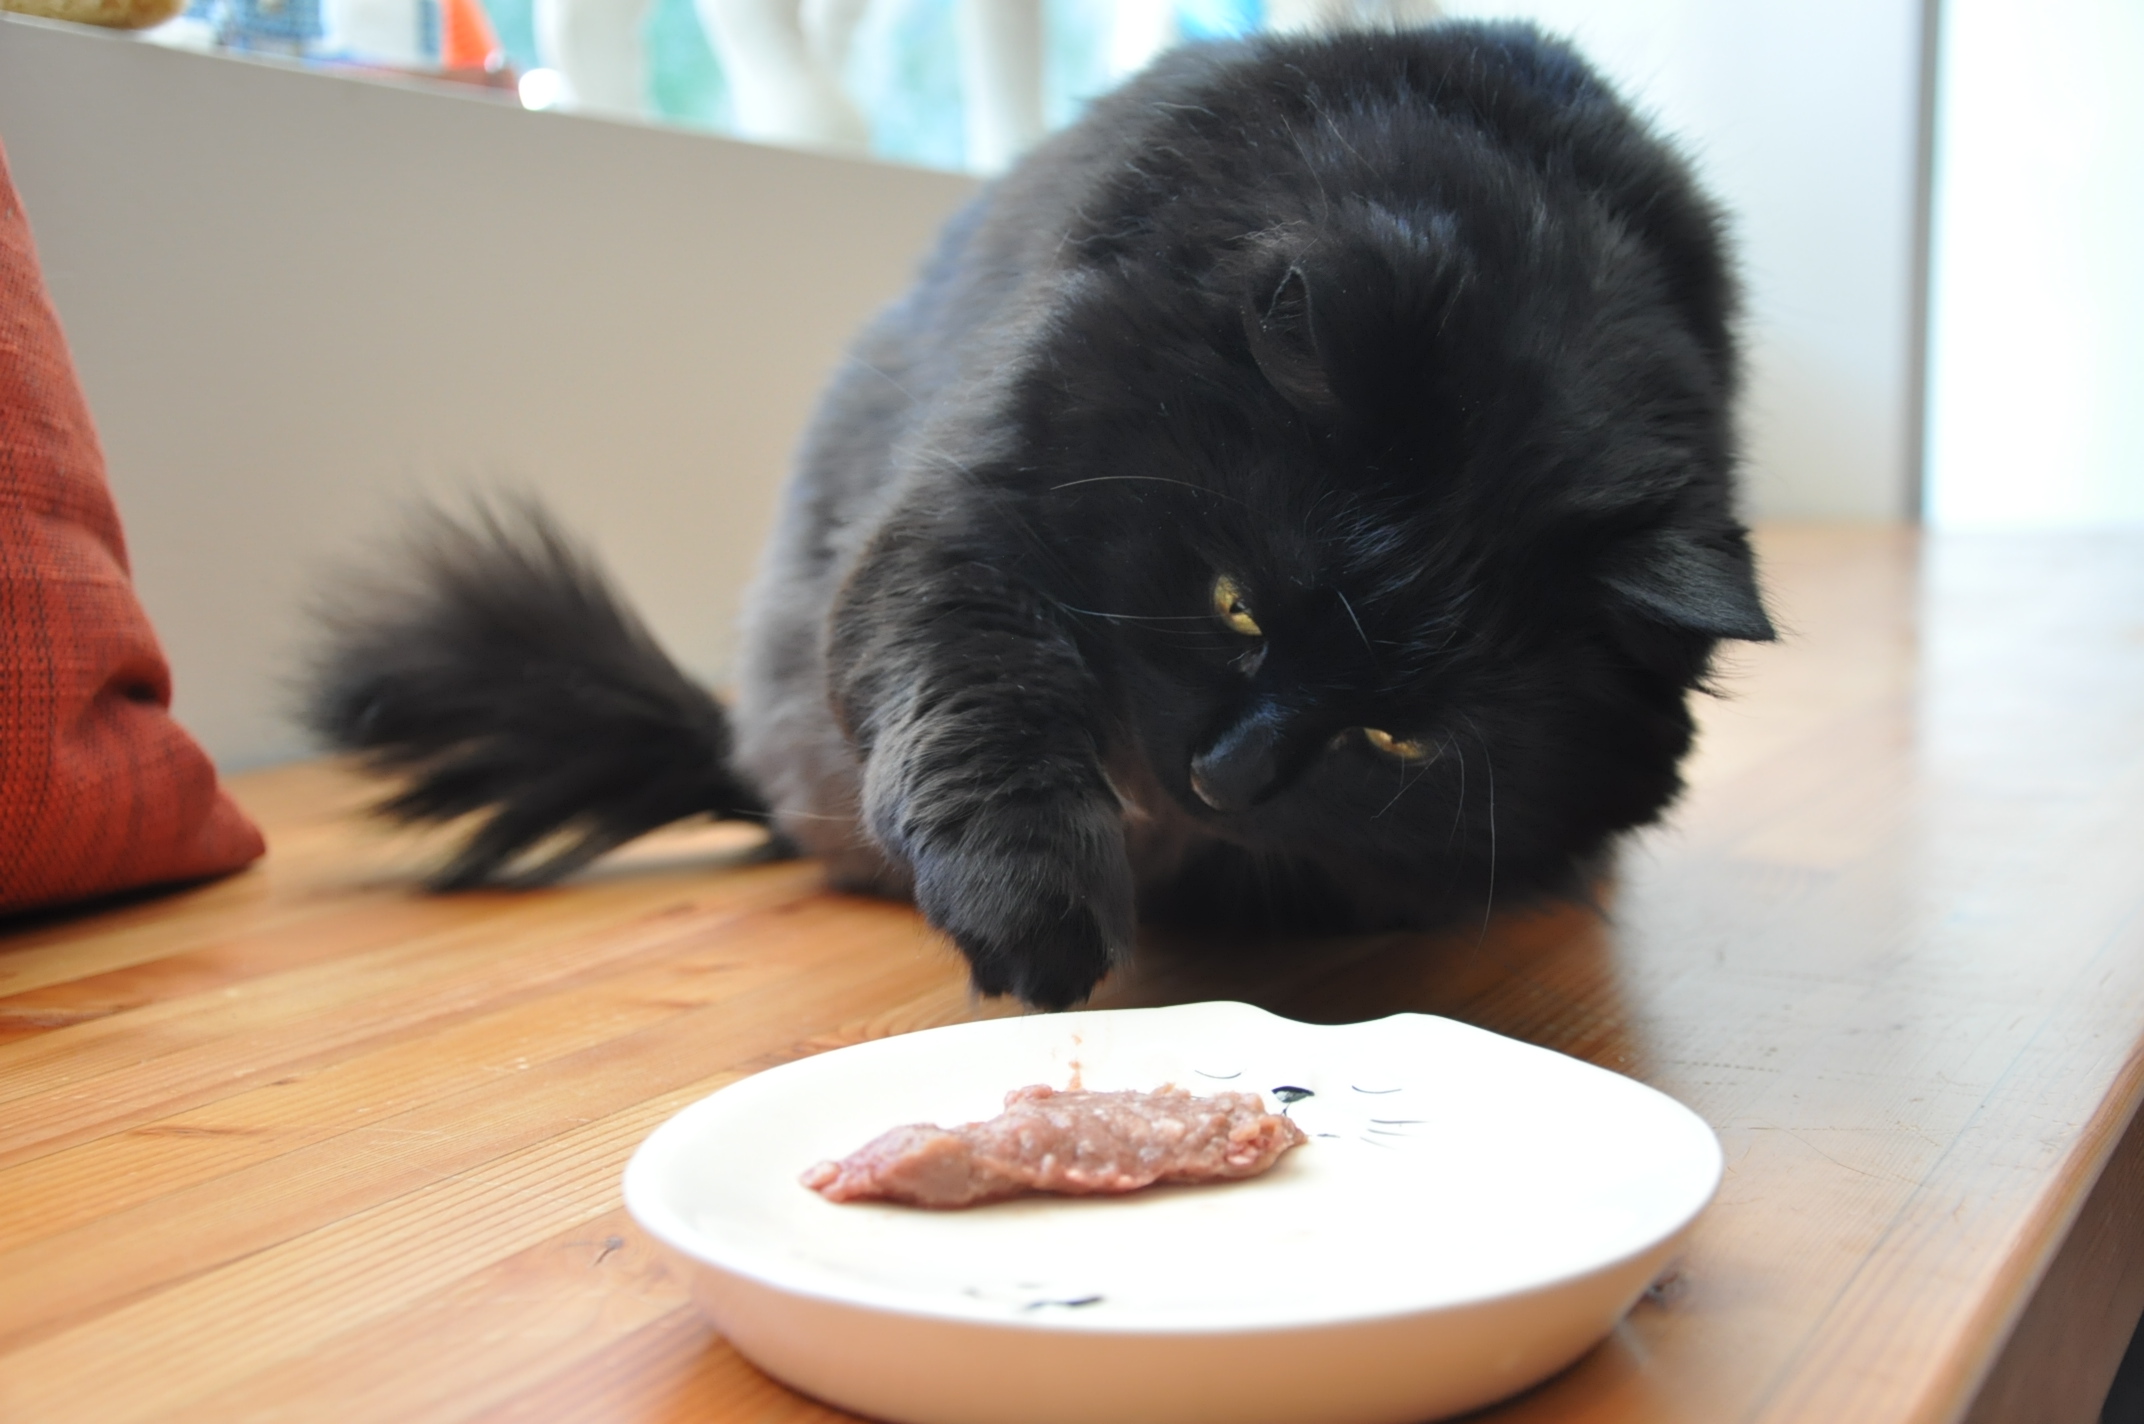 Cat eating raw cat food